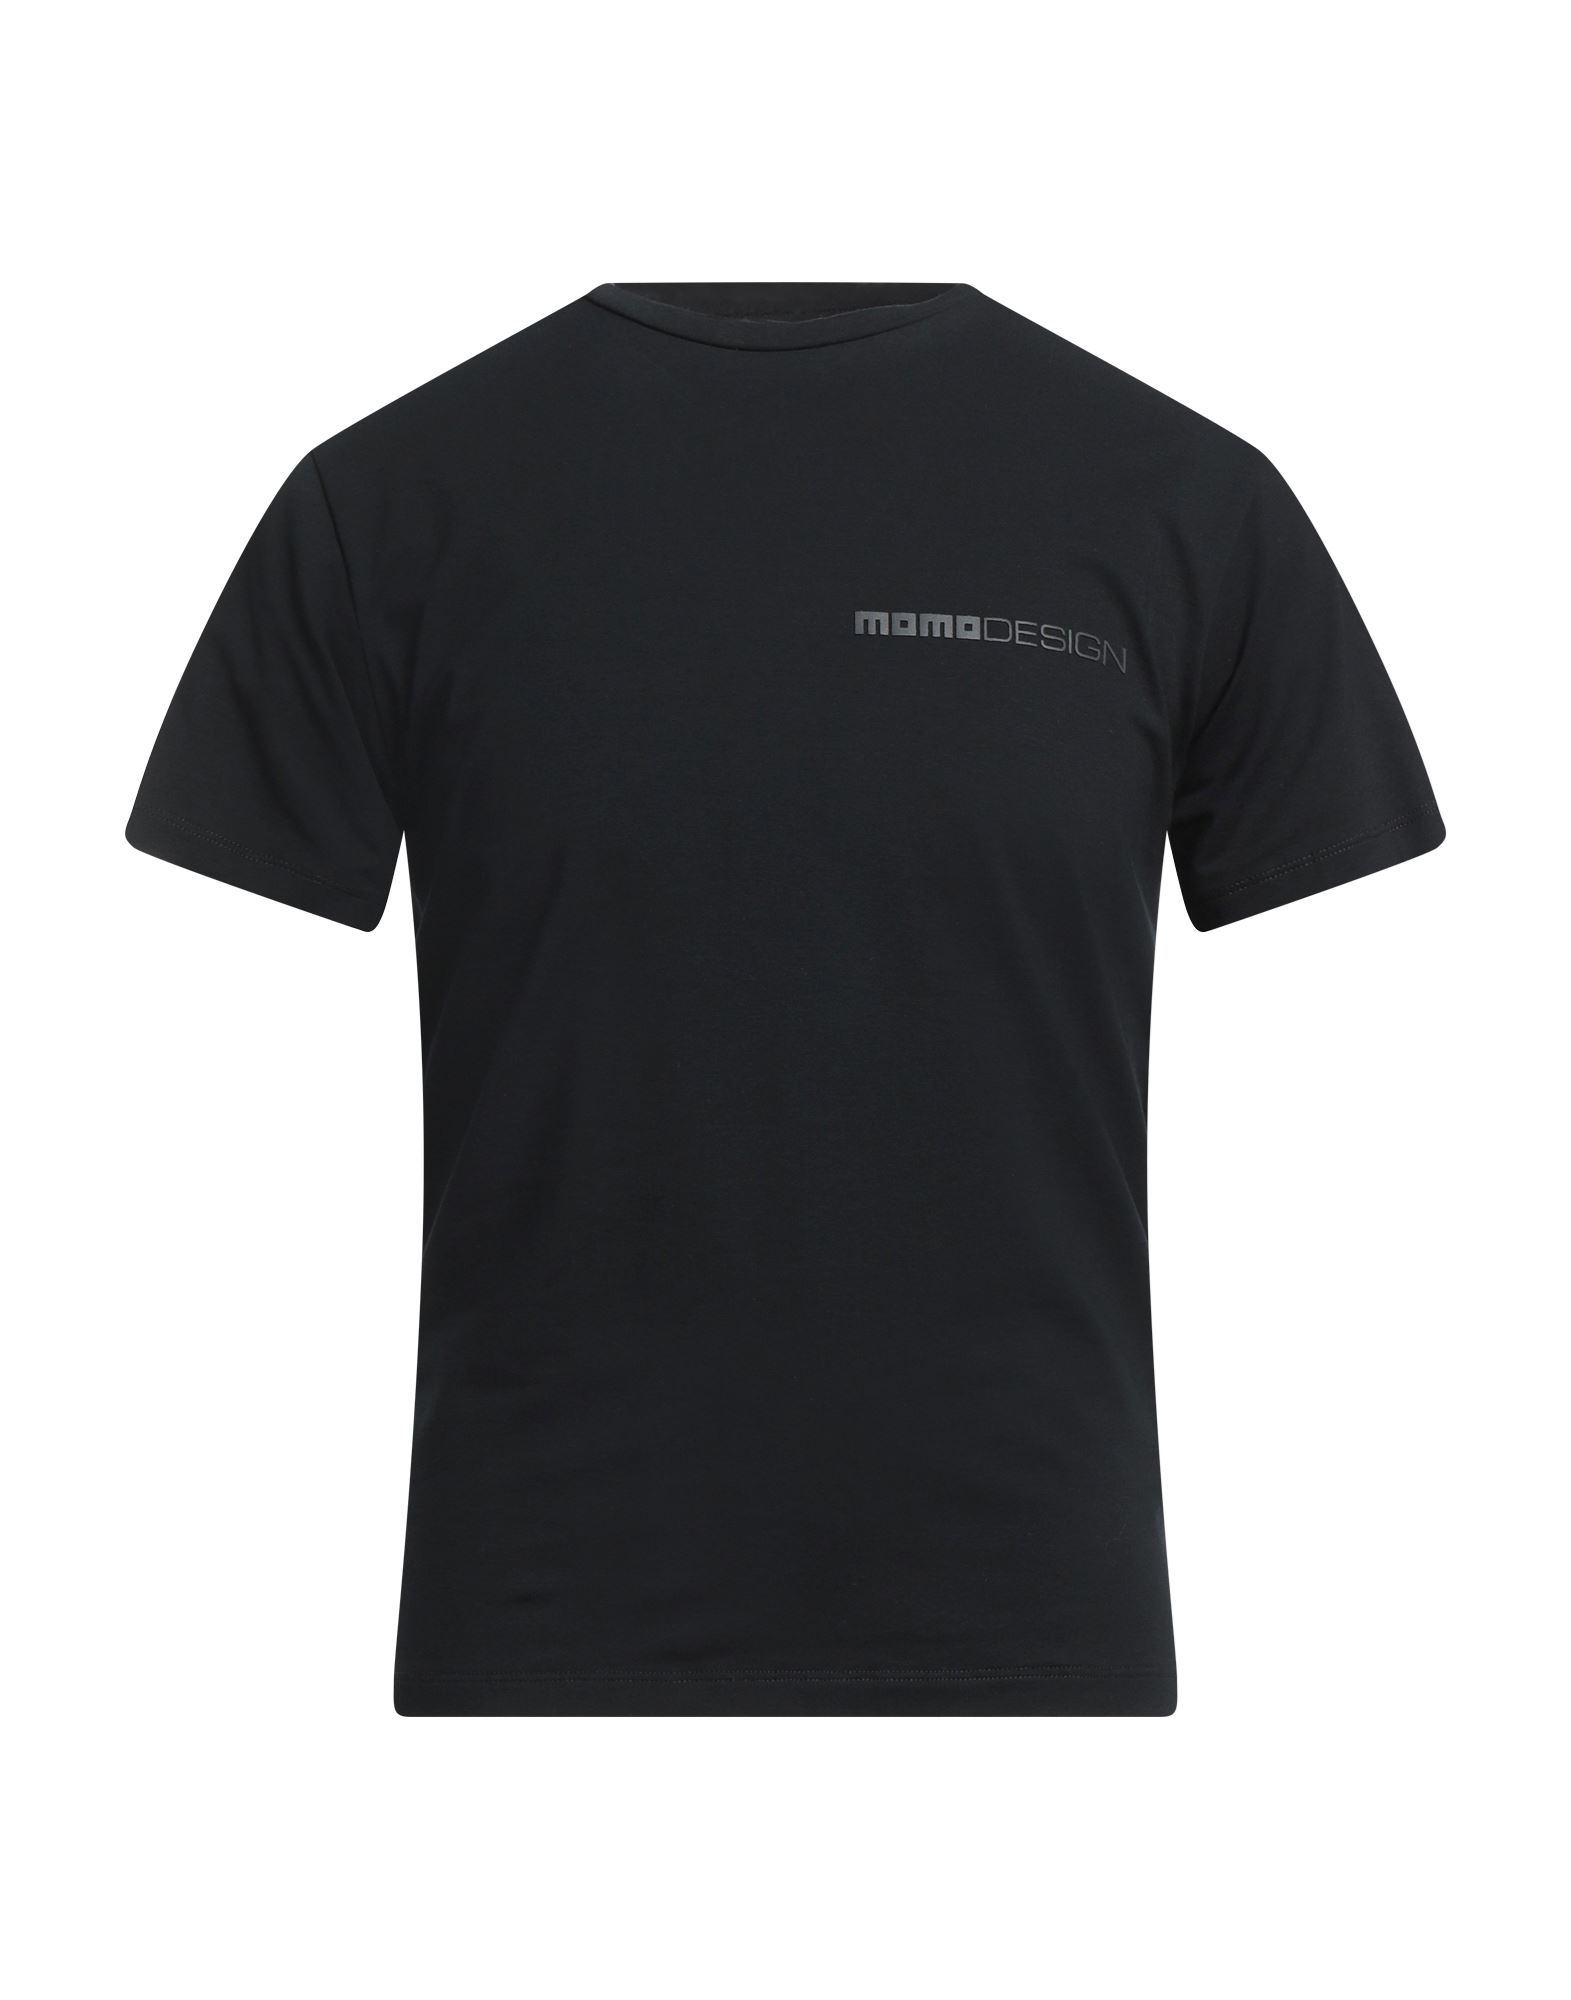 Momo Design T-shirts In Black